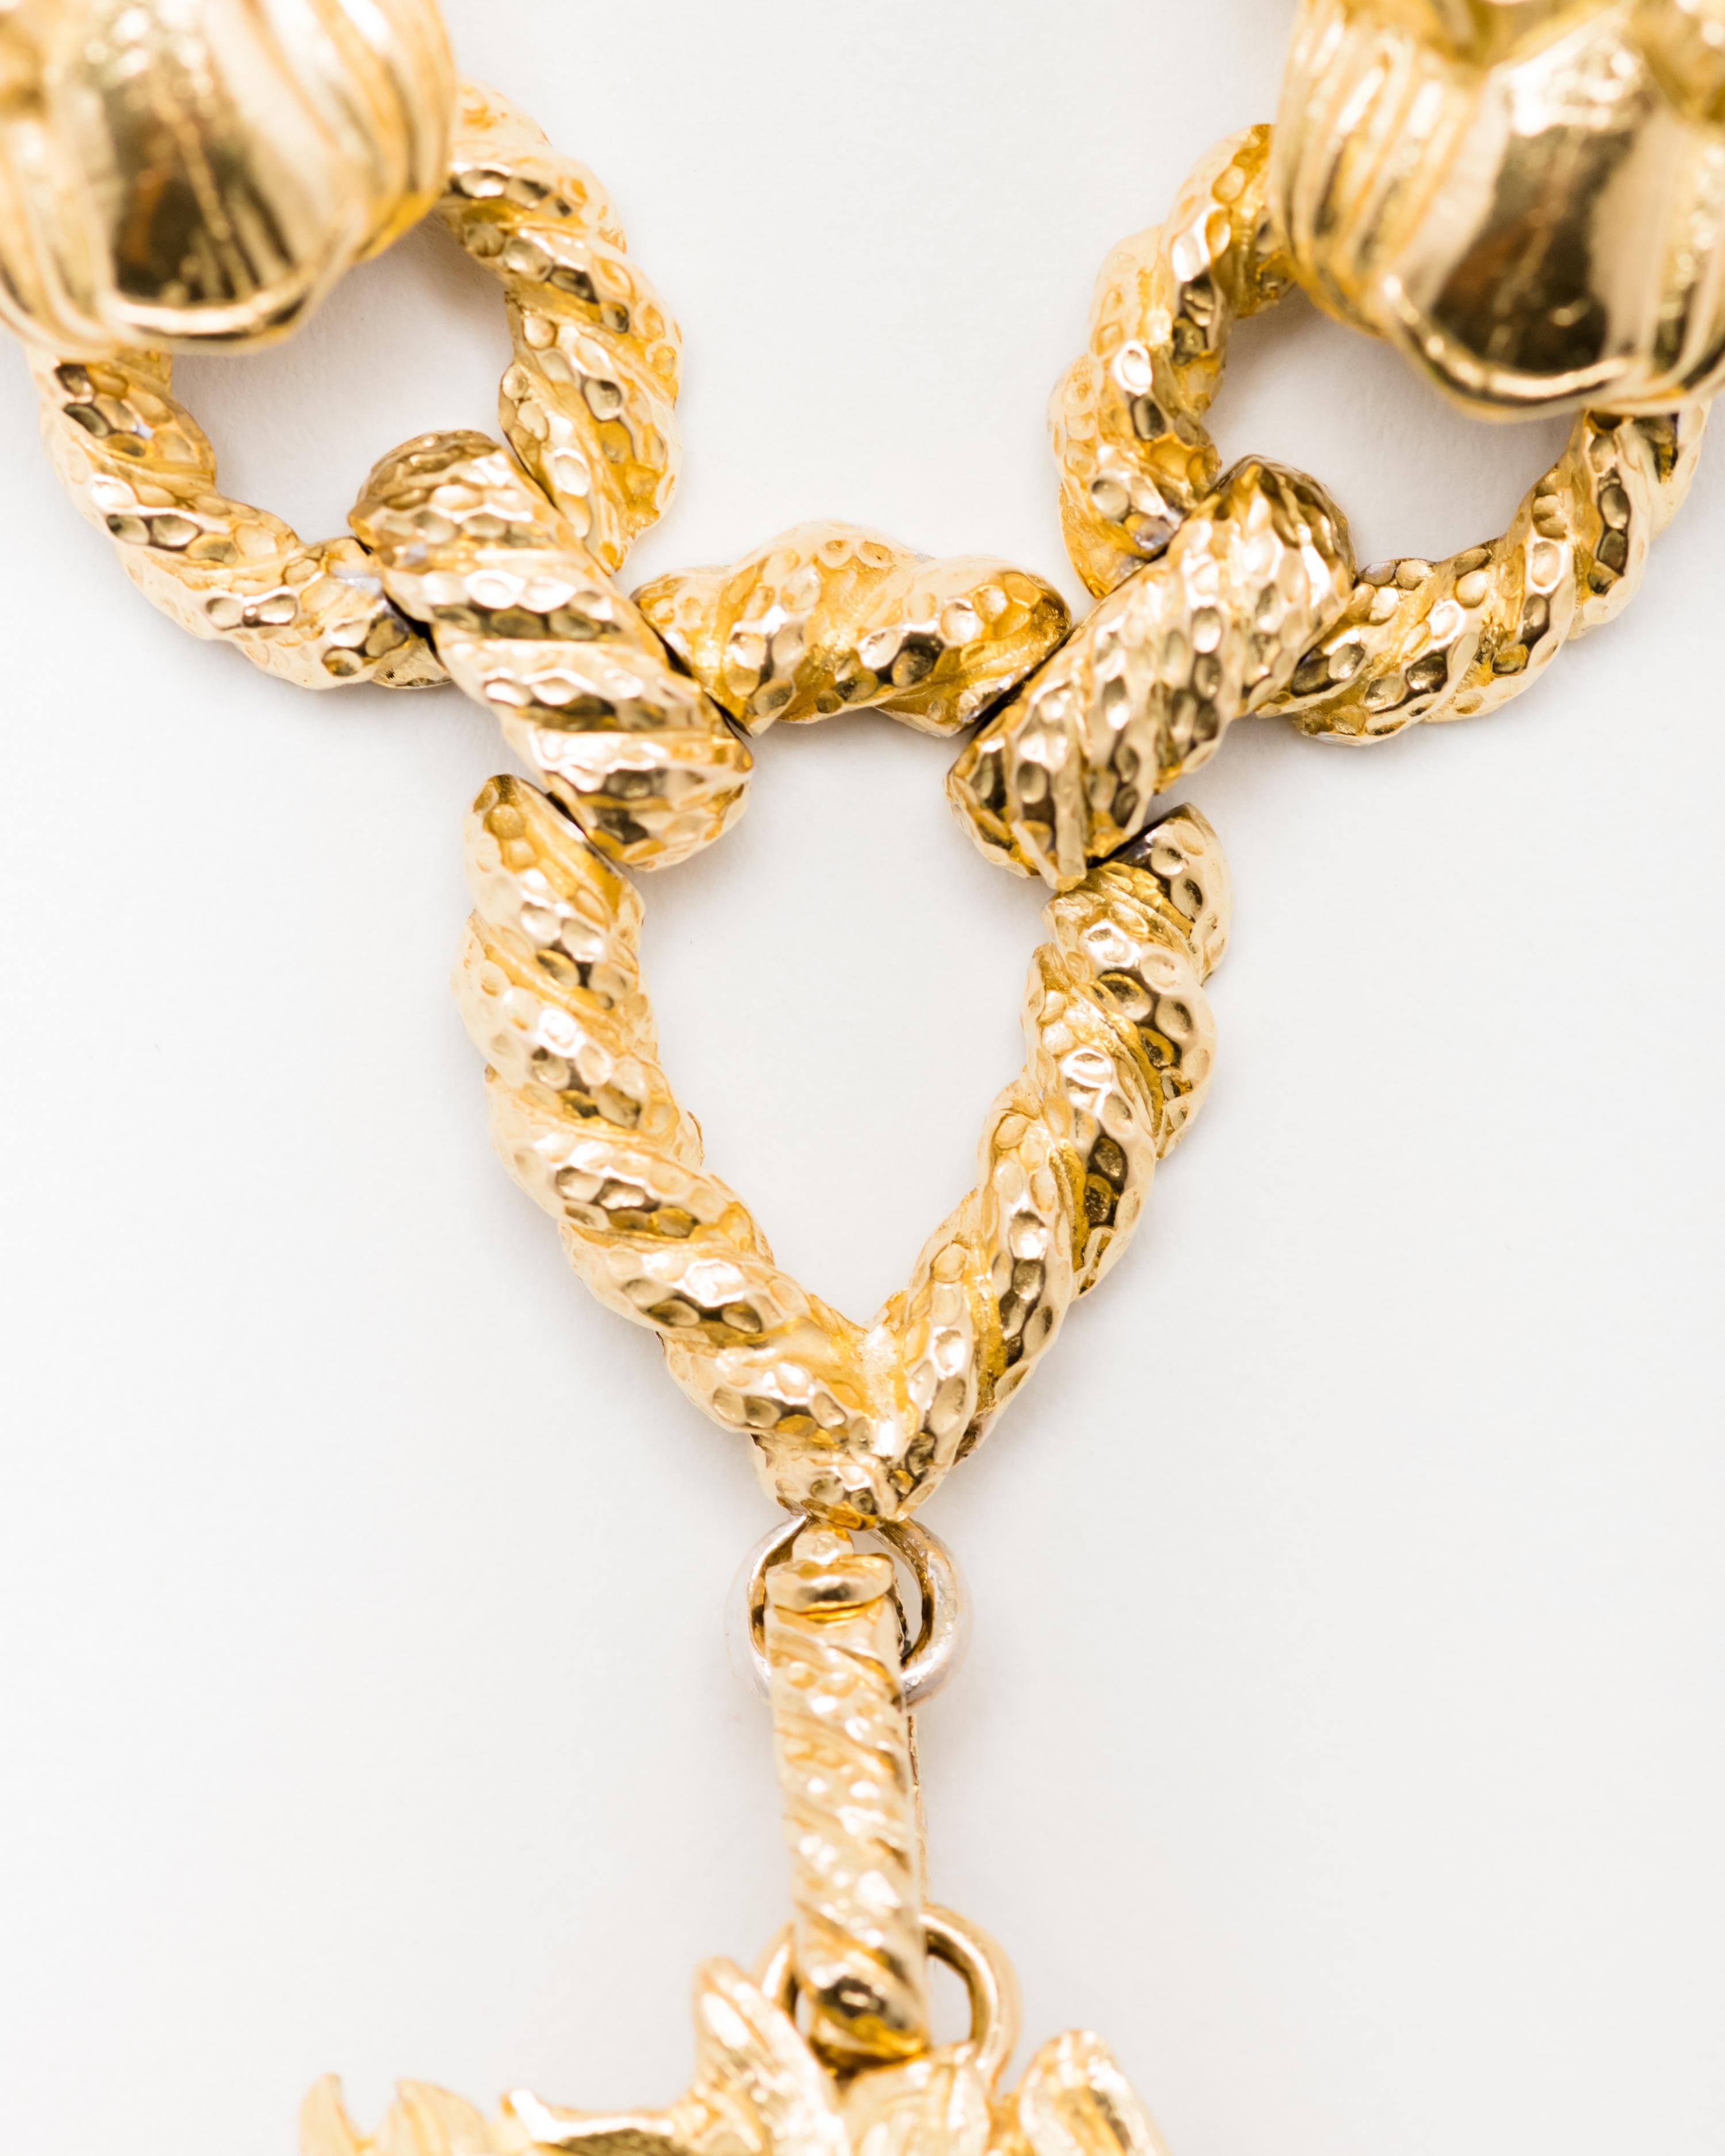 Women's David Webb 18 Karat Gold Necklace with Lion Head Pendant, circa 1965